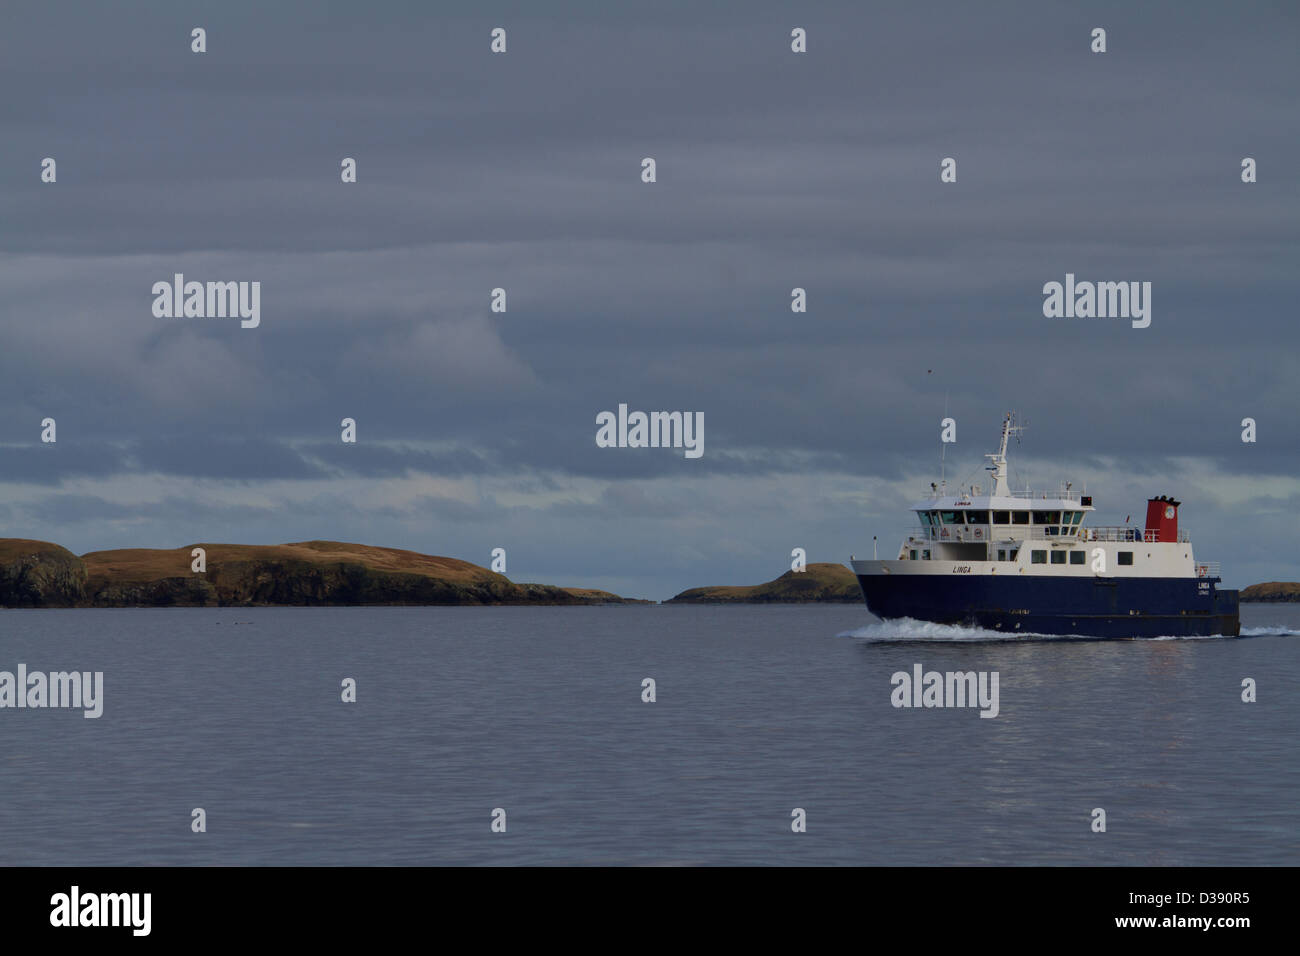 The Whalsay ferry Linga on its way to Shetland mainland Stock Photo